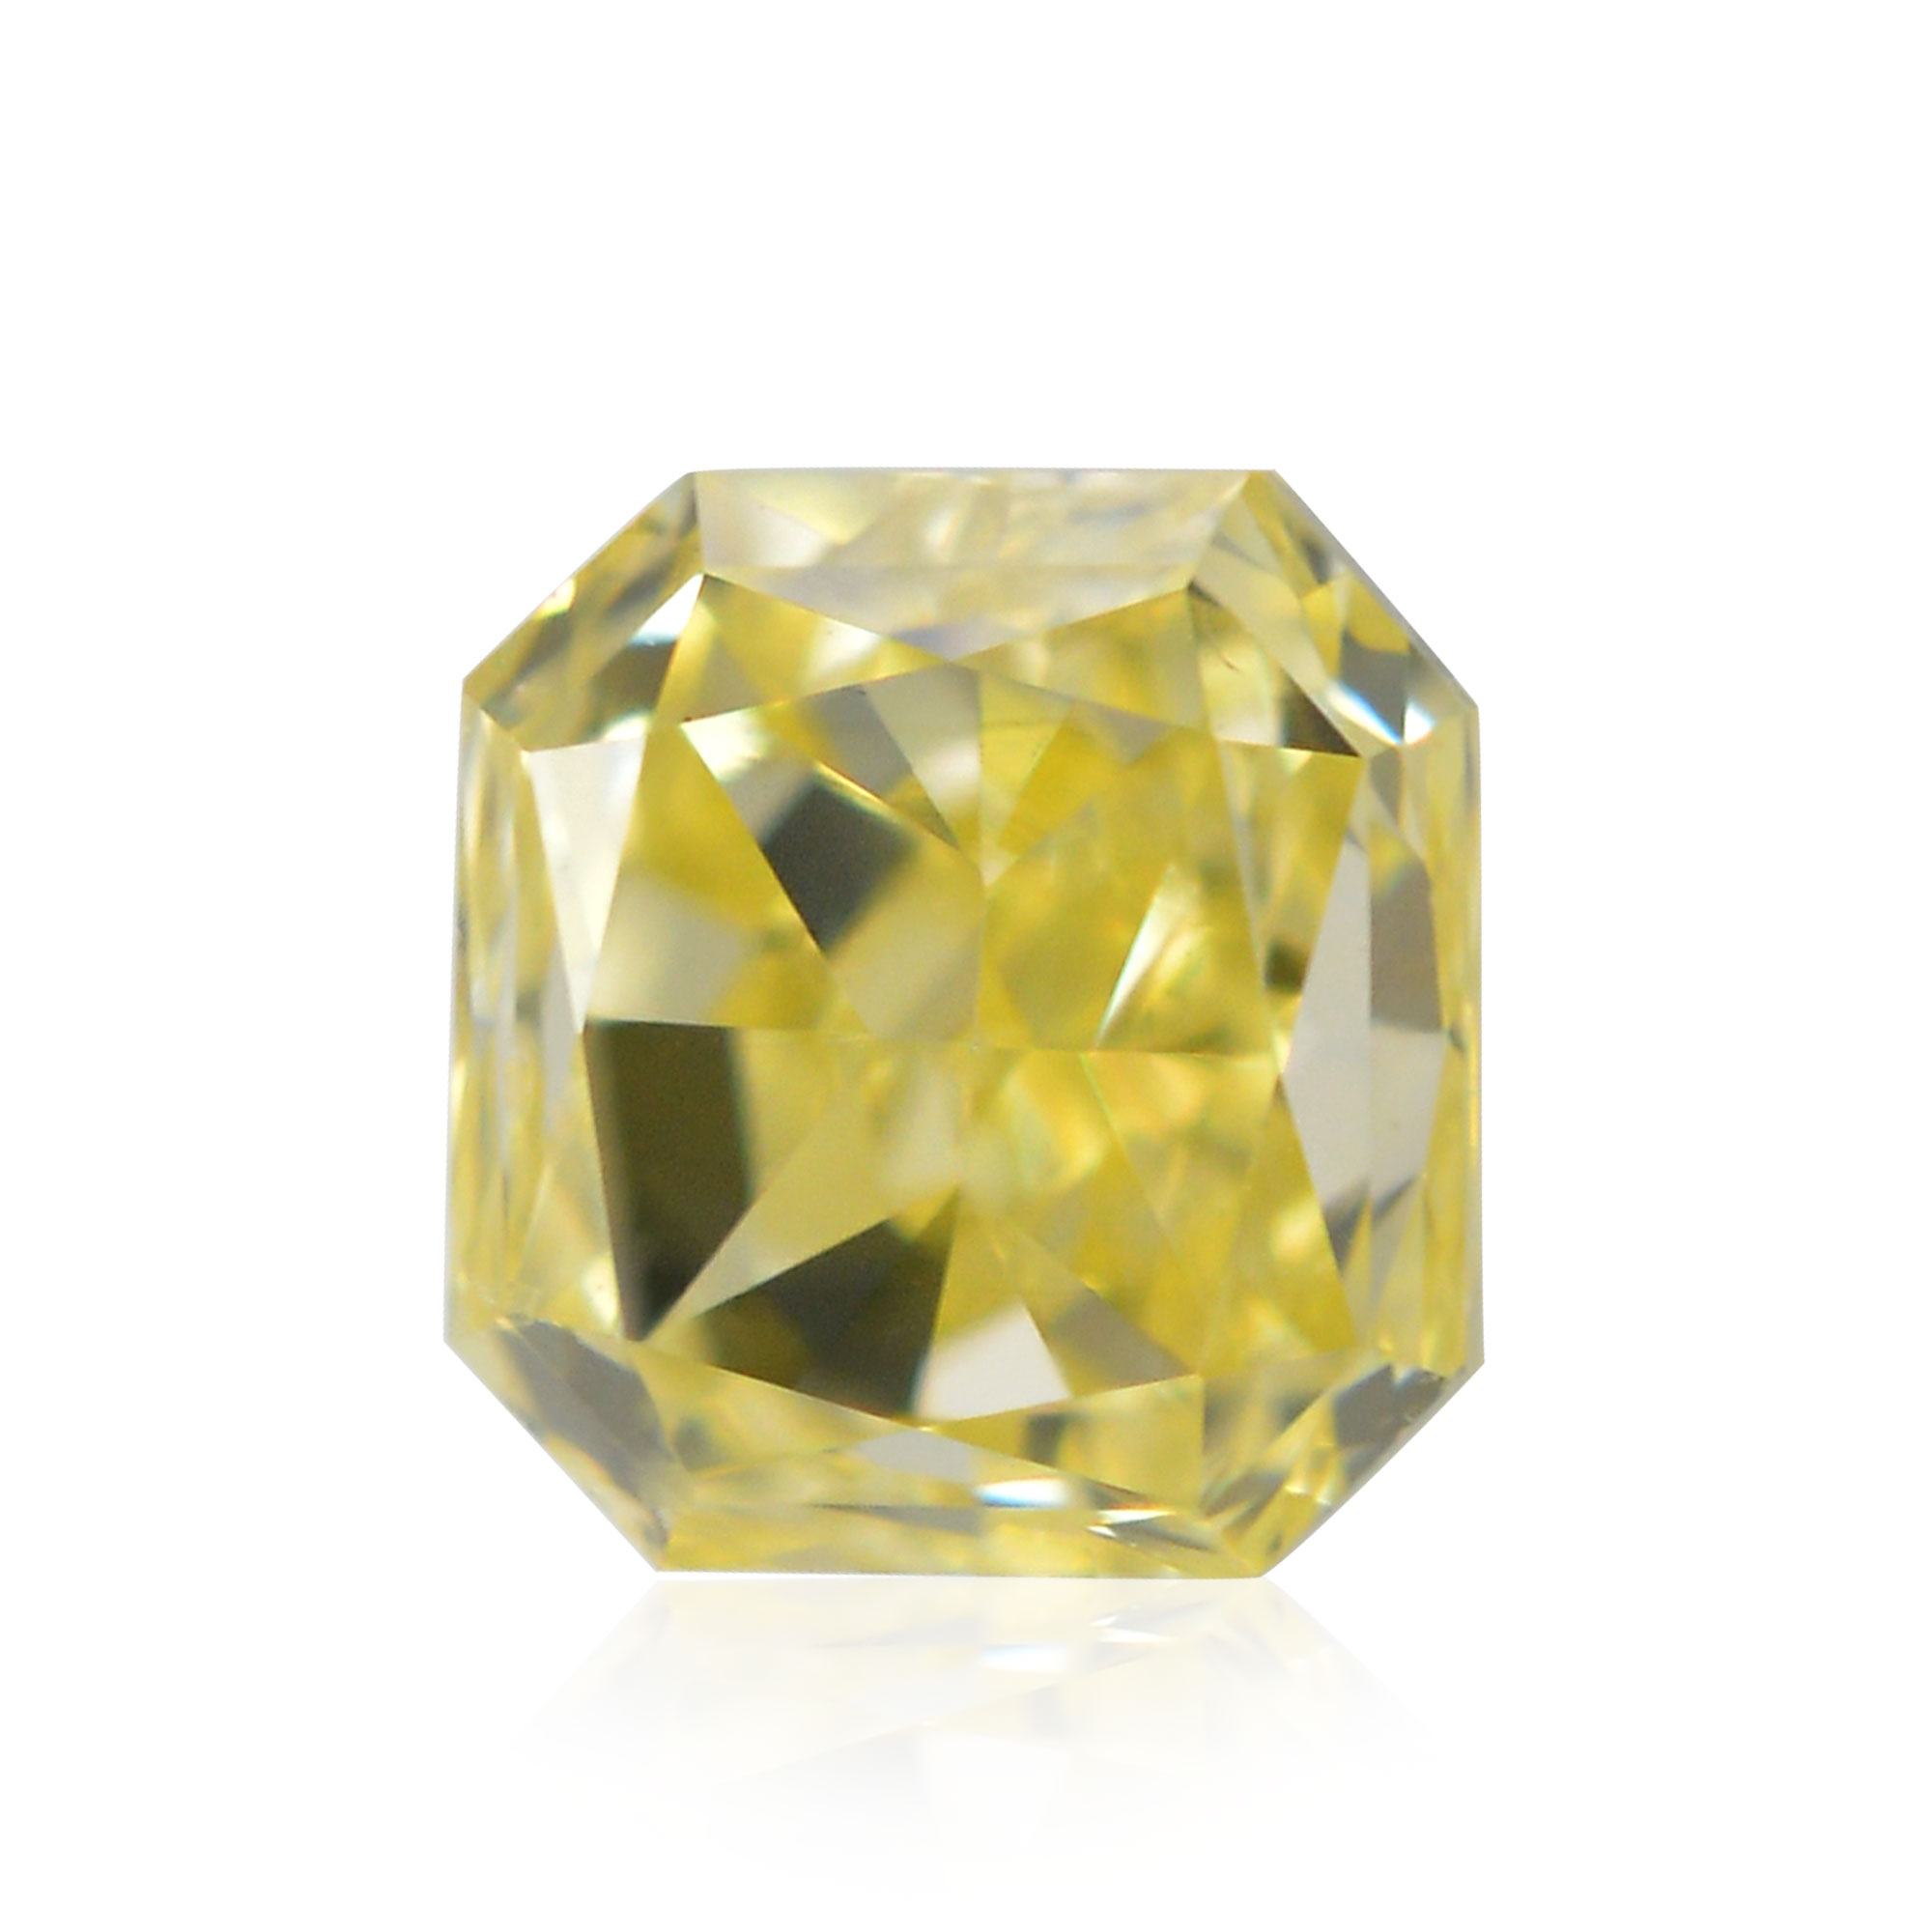 0.35 carat, Fancy Intense Yellow Diamond, Radiant Shape, VS2 Clarity, IGI,  SKU 319903